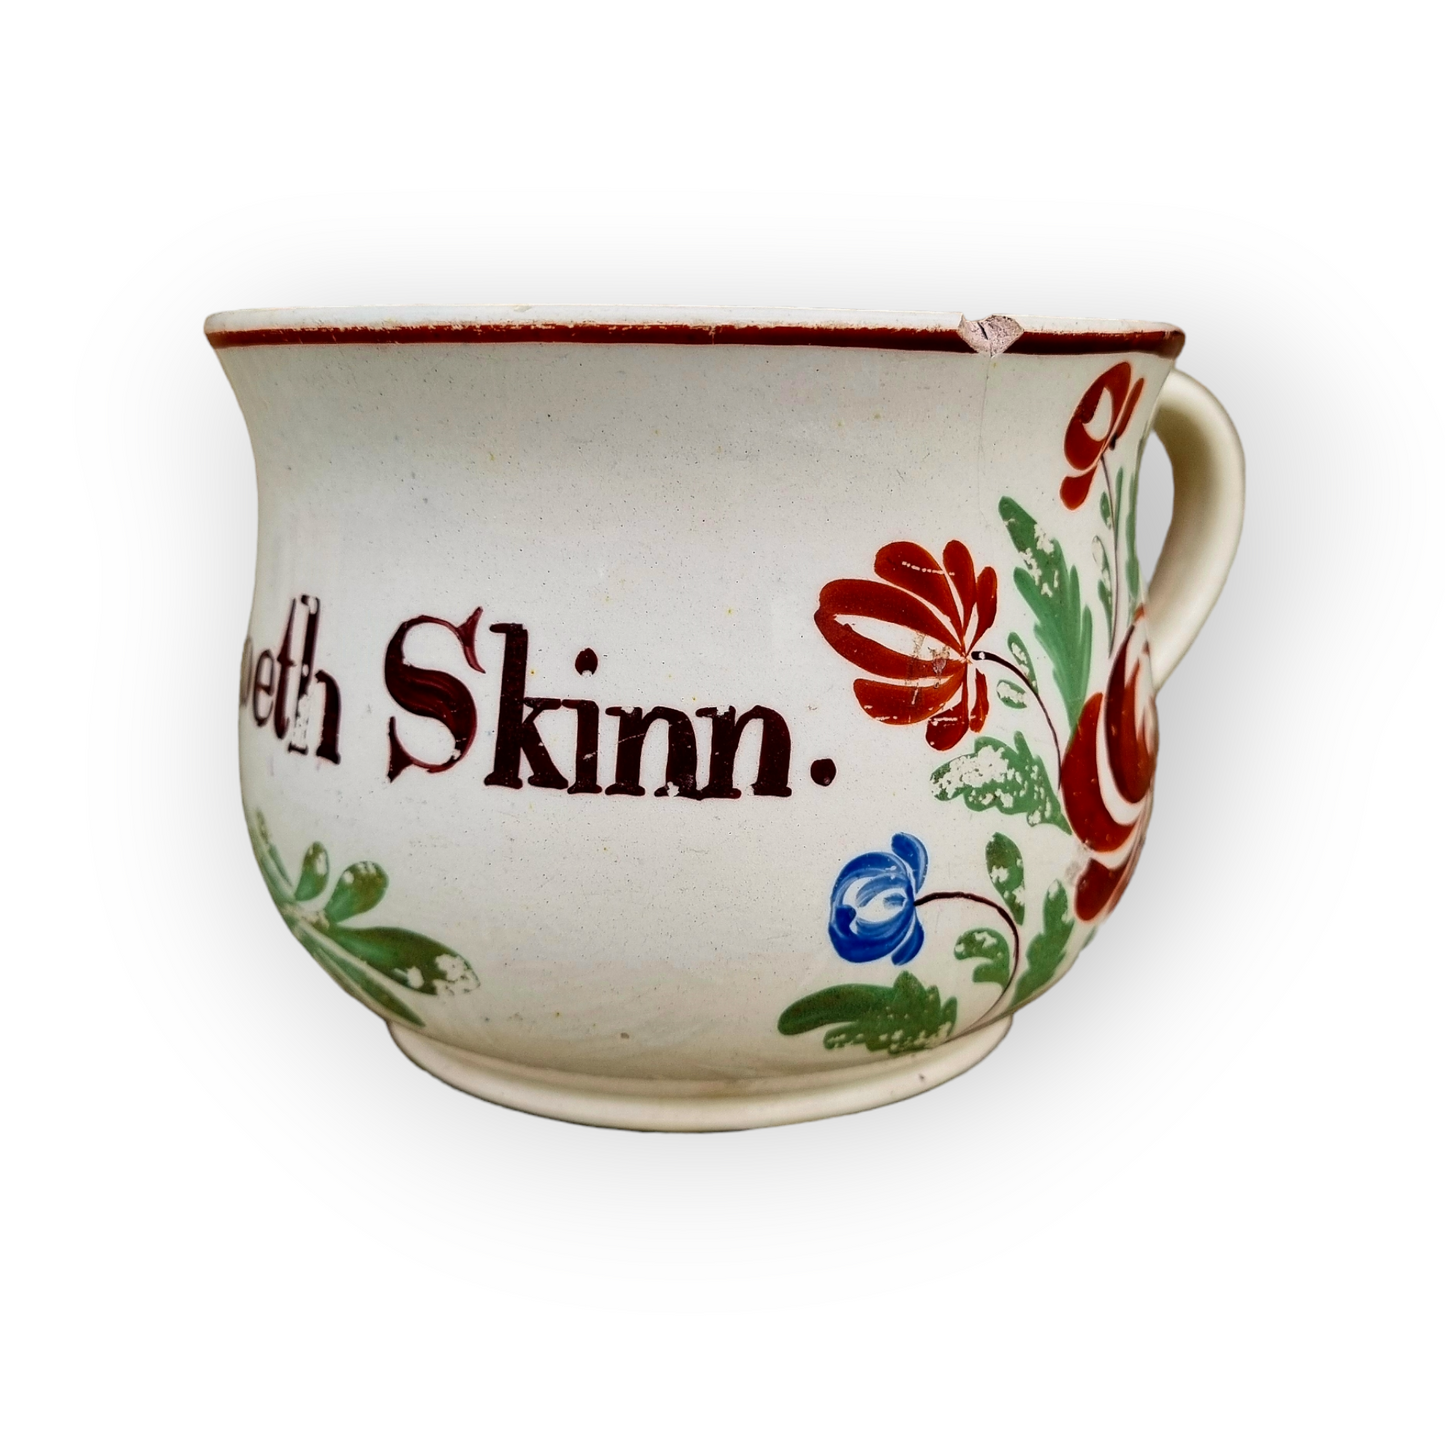 Diminutive Late 18th Century English Antique Creamware Child's Piss Pot / Chamber Pot Inscribed "Jane Elizabeth Skinner"